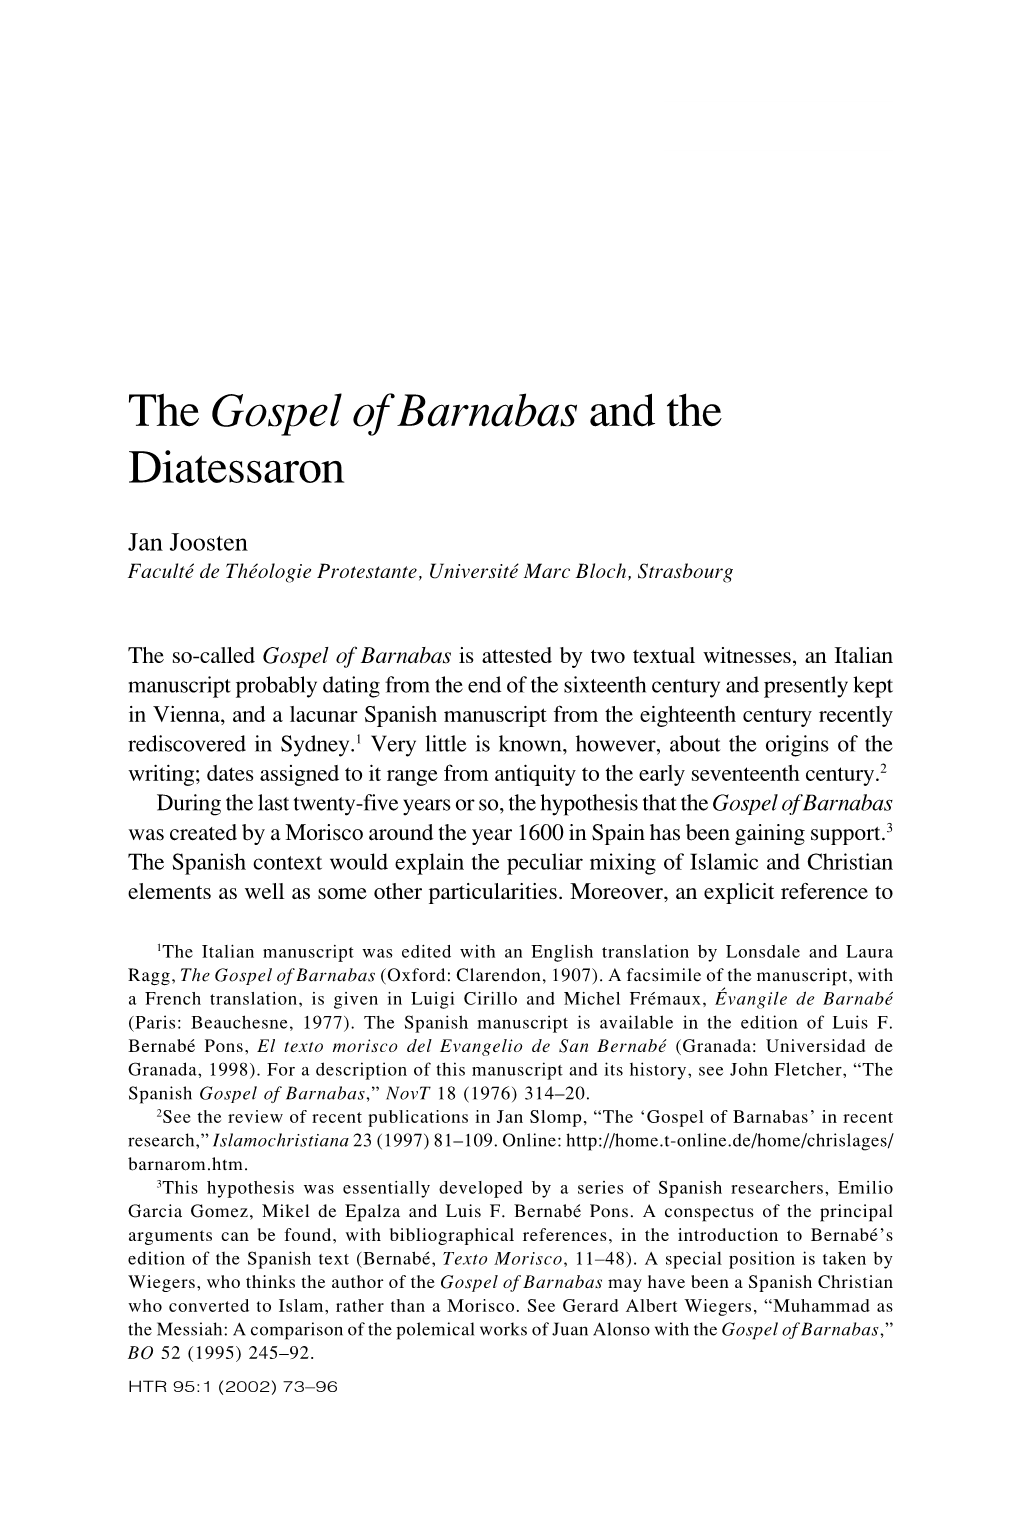 The Gospel of Barnabas and the Diatessaron